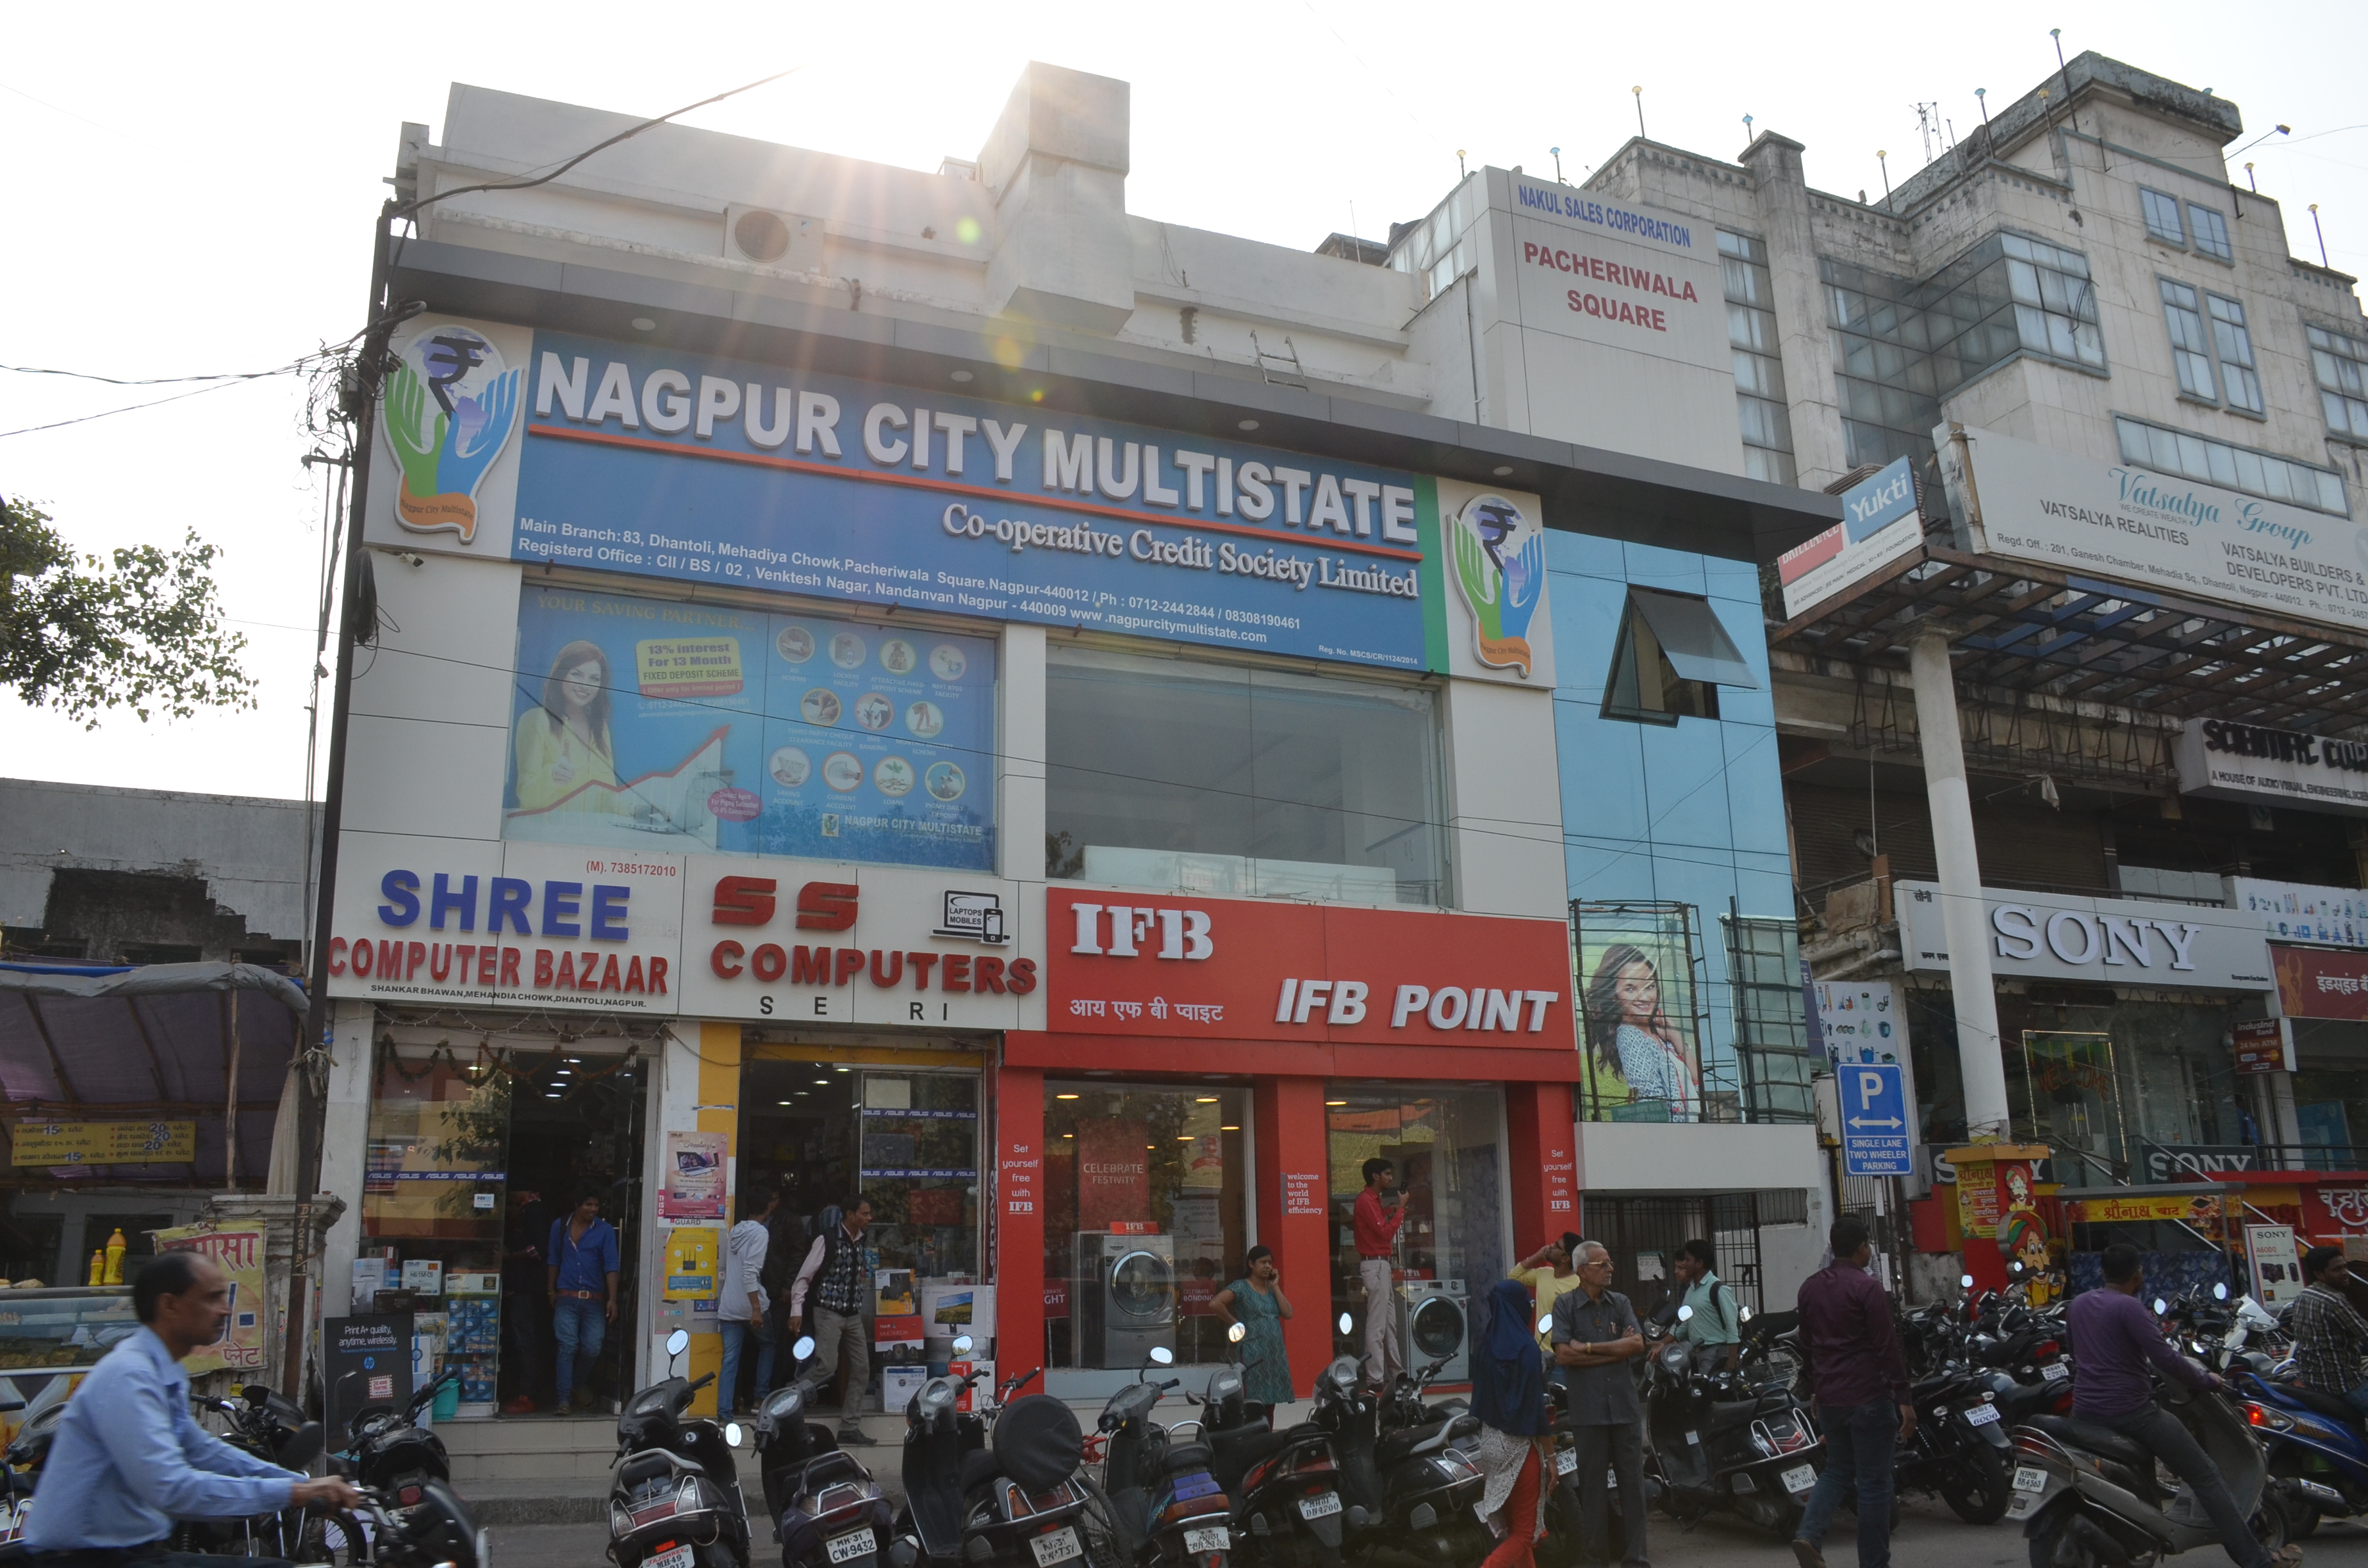 Nagpur City Multistate